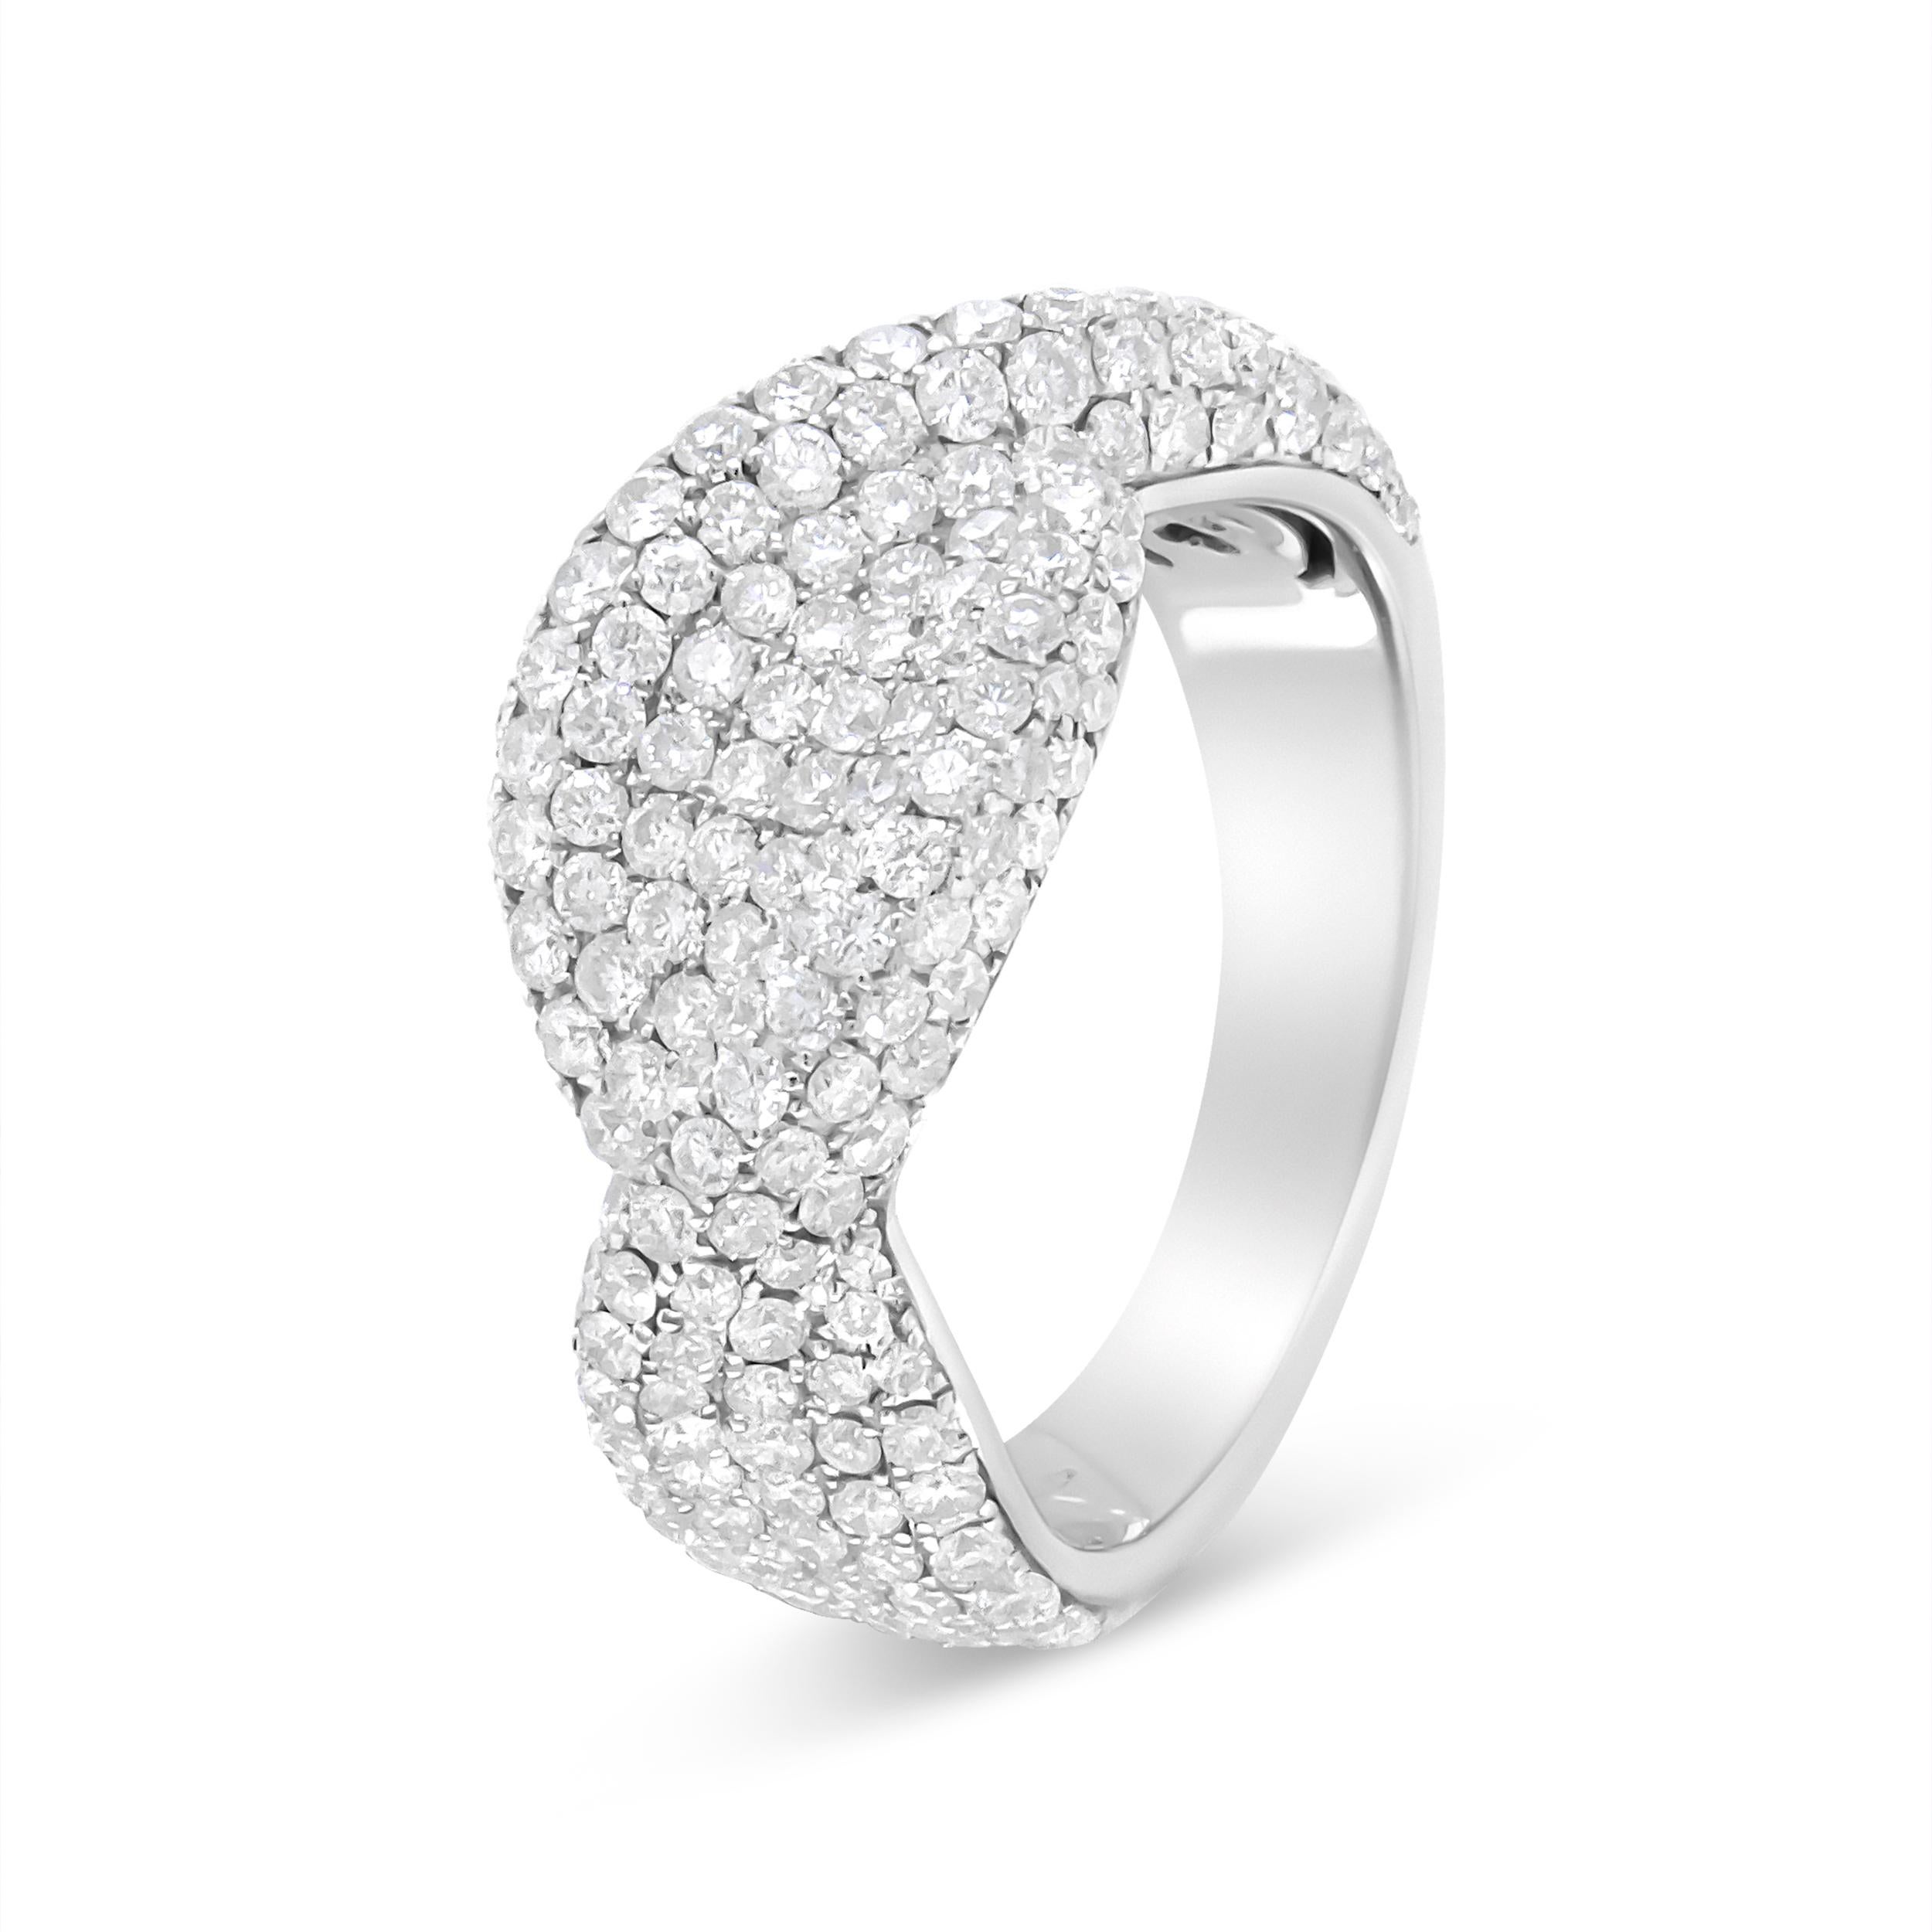 1/4 carat diamond ring on hand